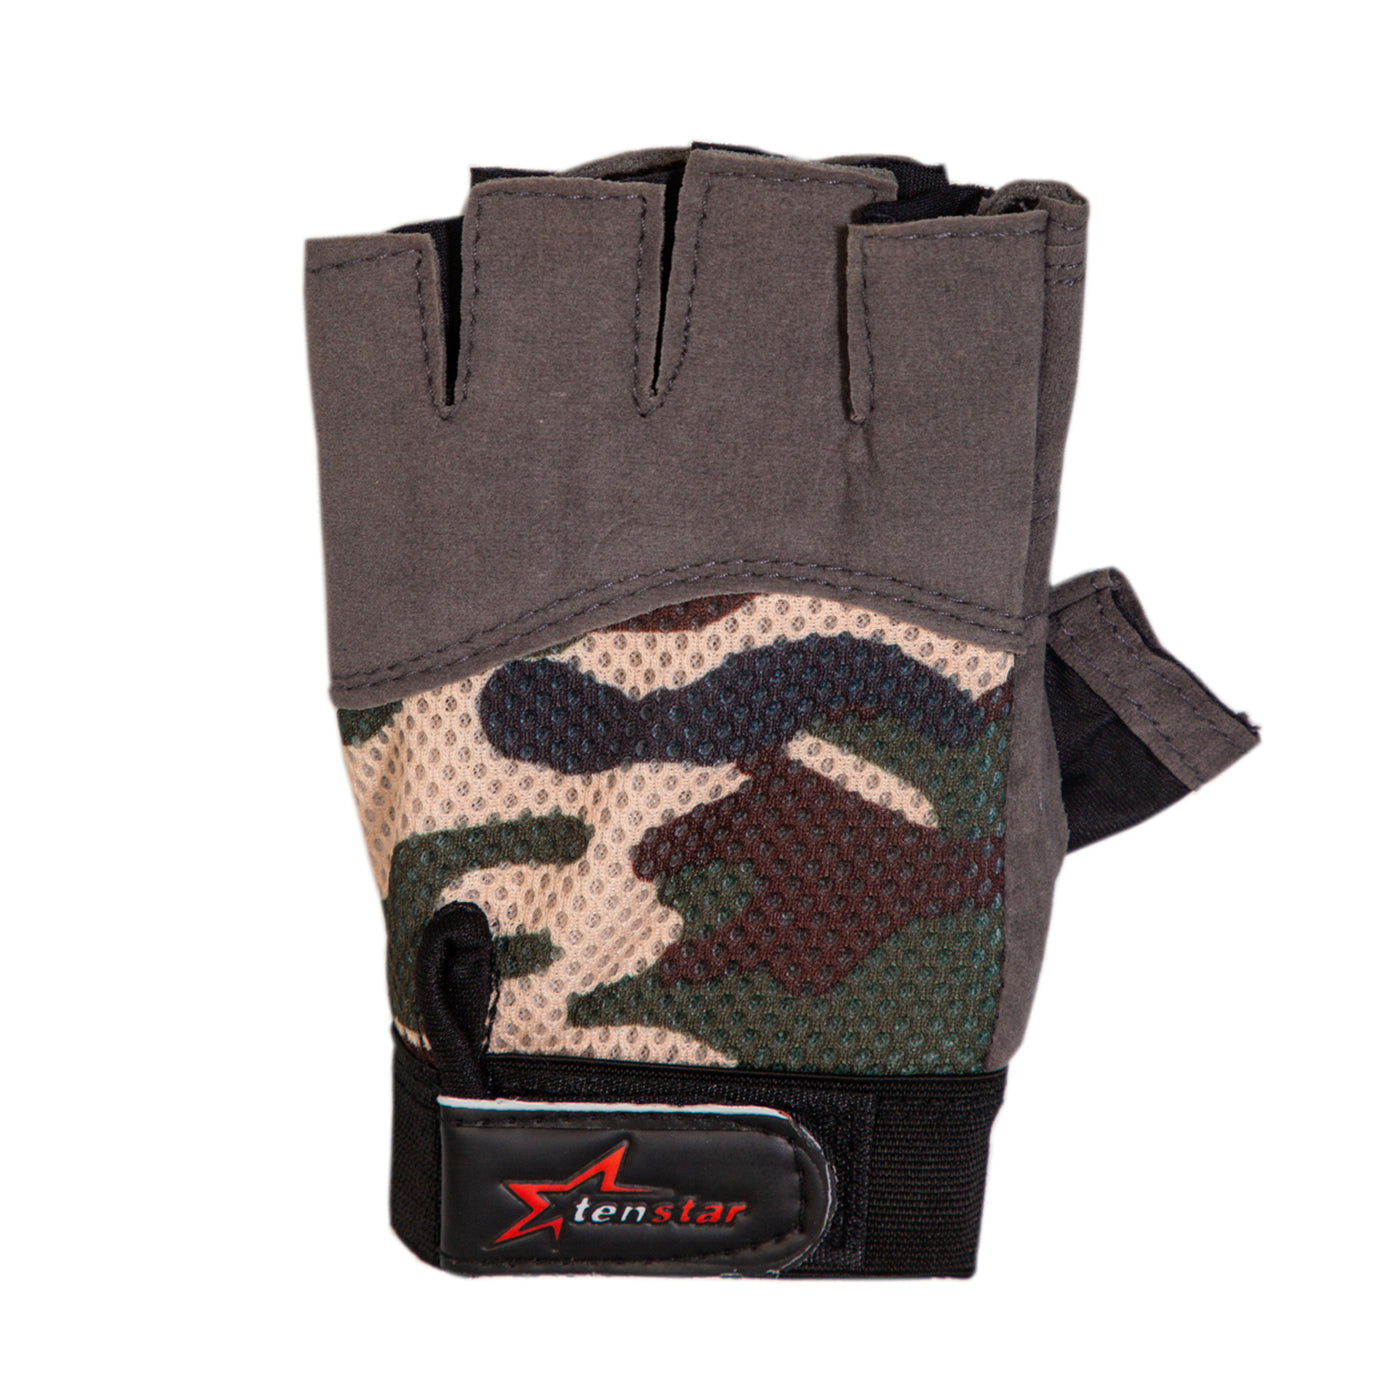 Tenstar Tenstar Camo Half finger Gym Gloves for Men freeshipping - athletive Gym Gloves - Men athletive